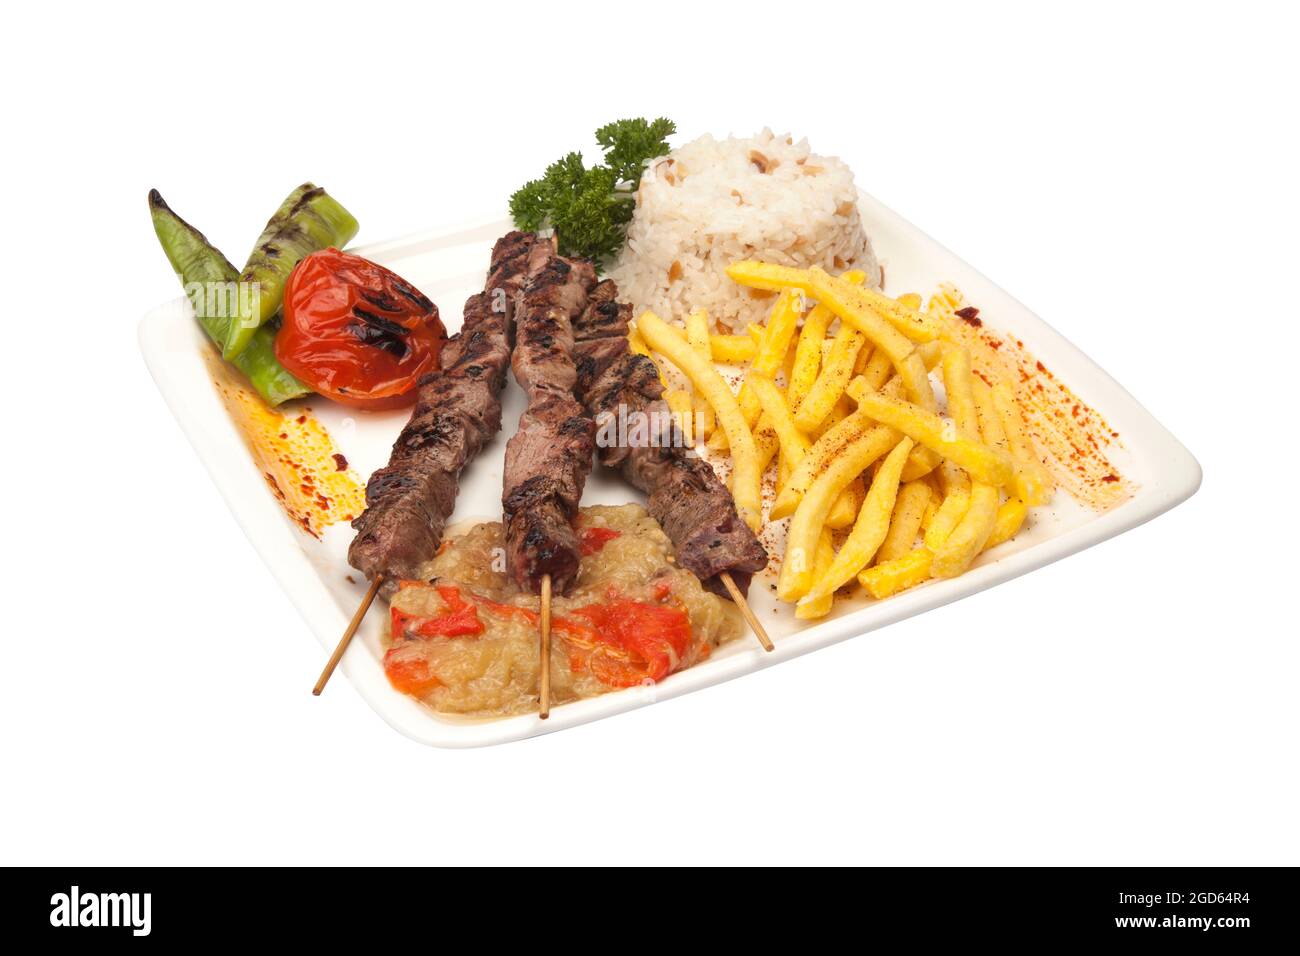 Kebab turco, kebab shish, piatto di kebab shish, con patatine fritte di riso, pepe, melanzana Foto Stock